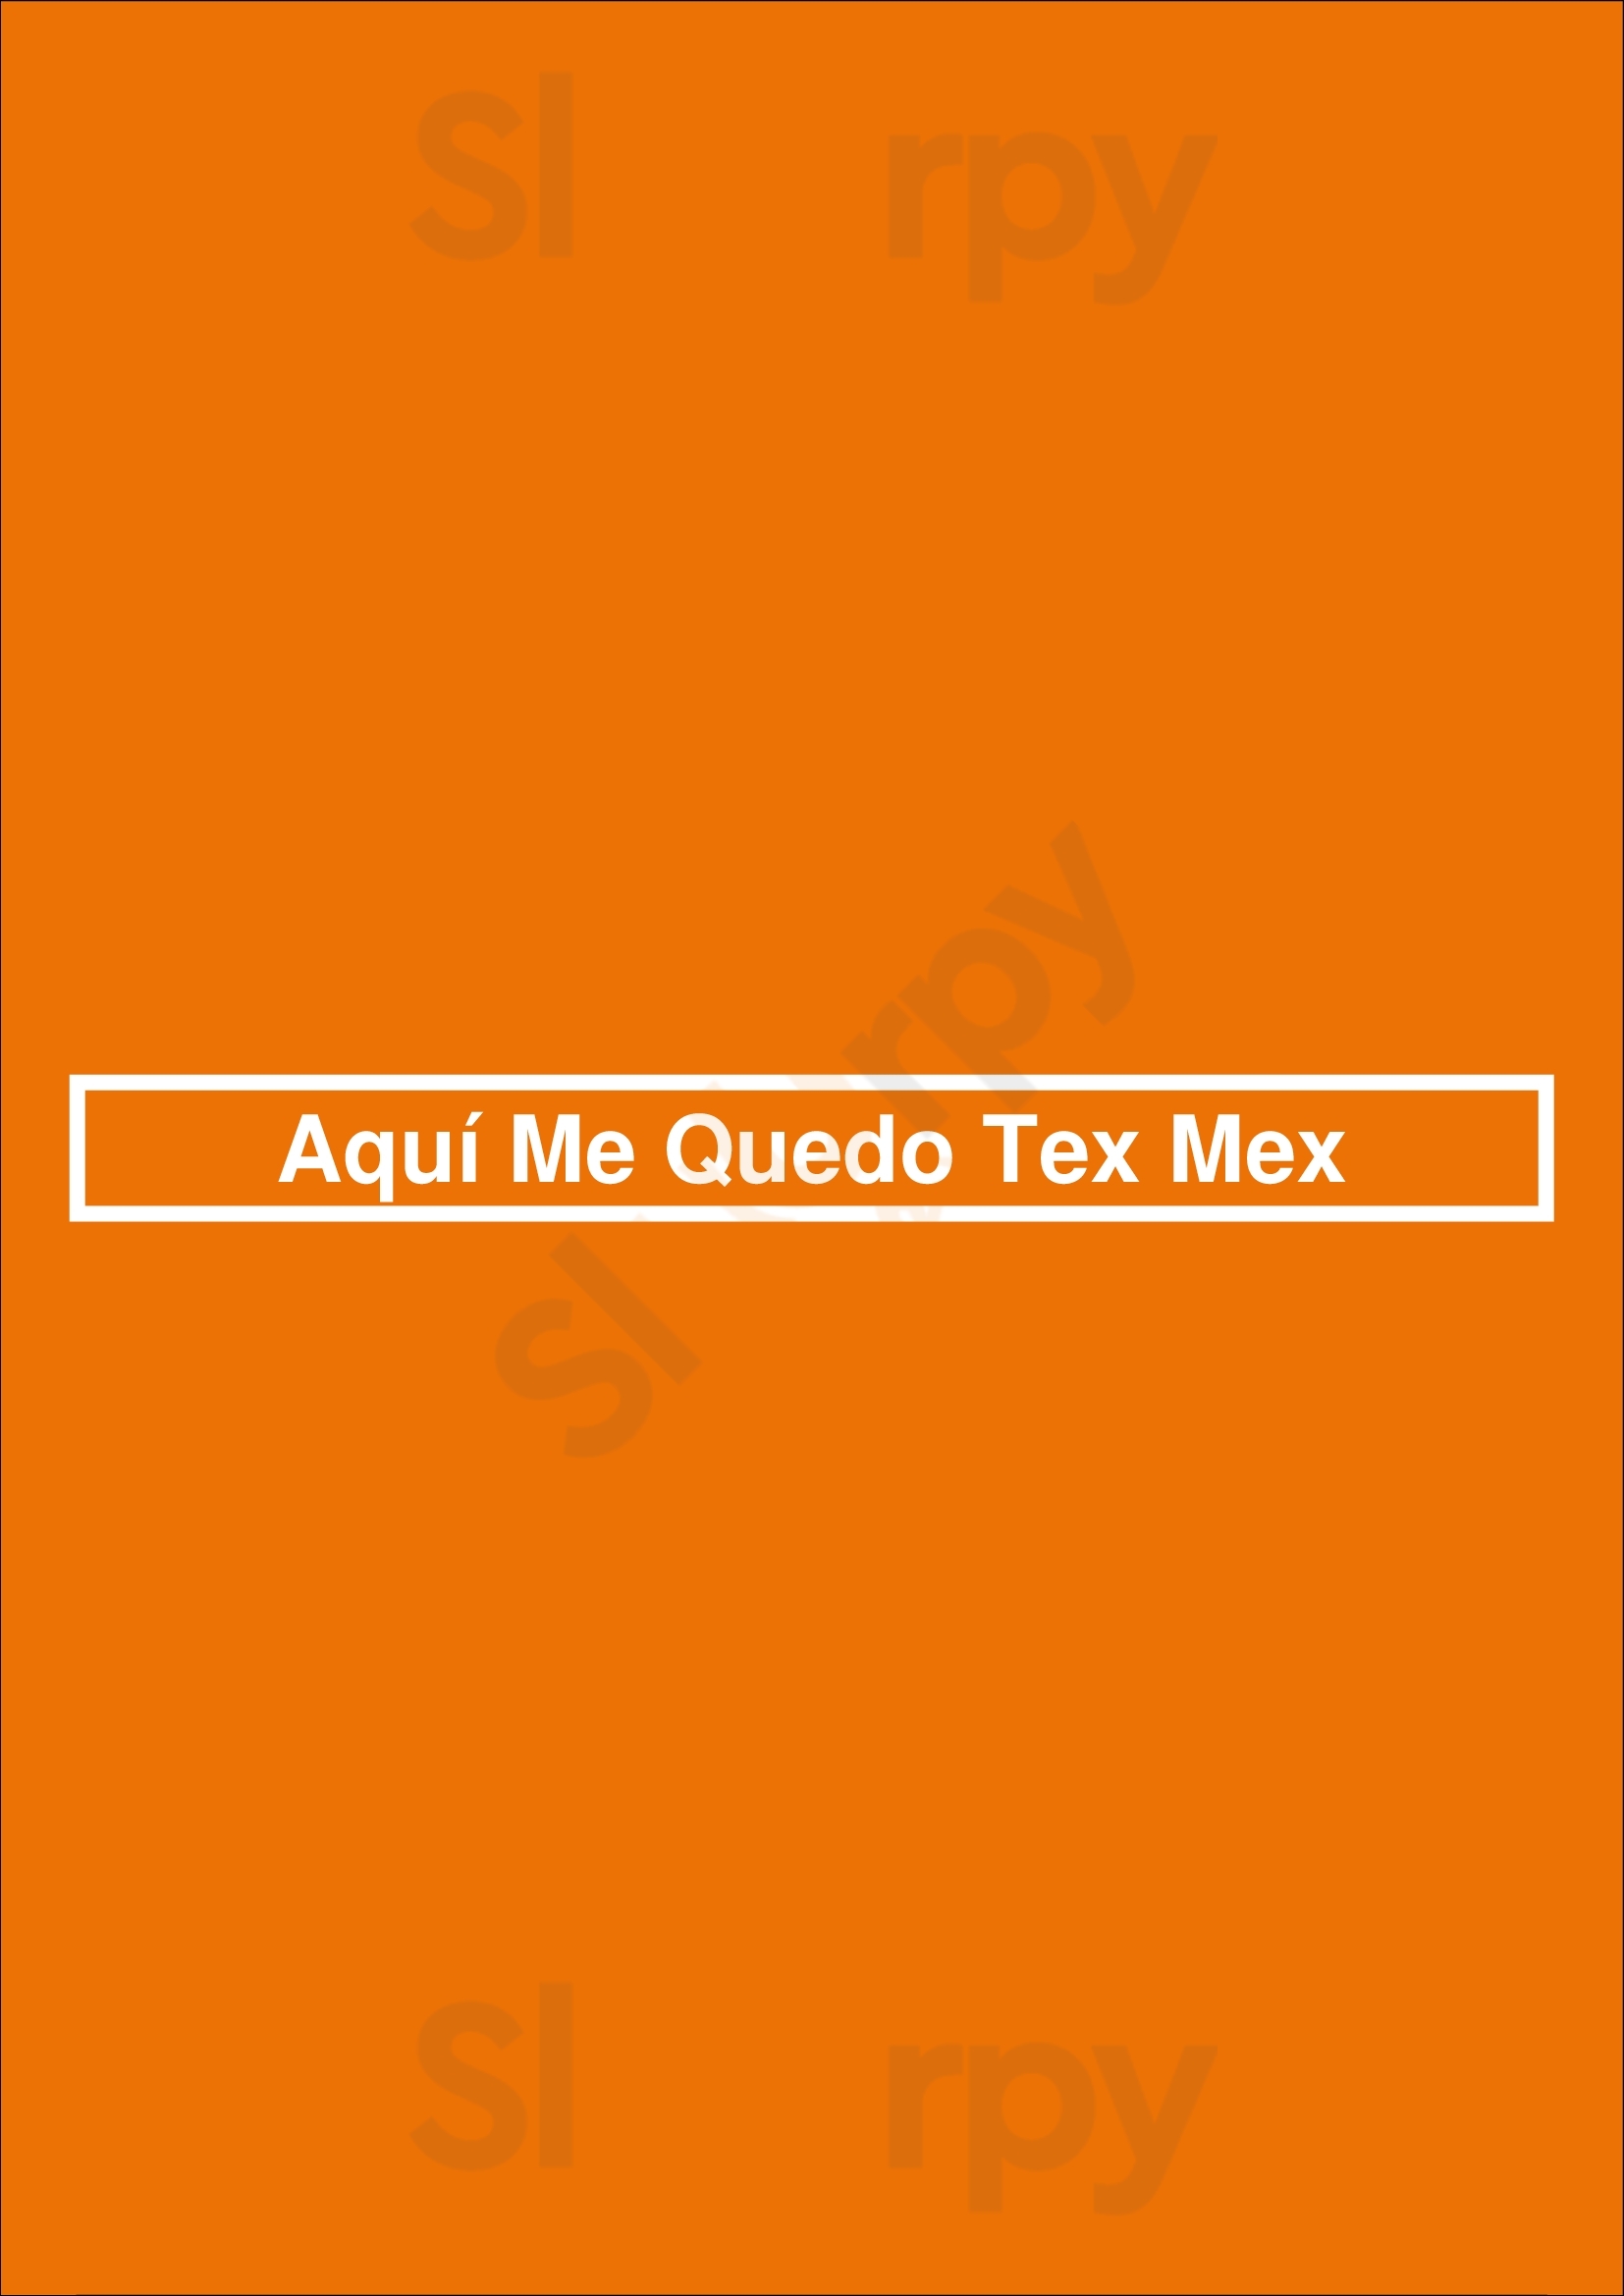 Aquí Me Quedo Tex Mex Buenos Aires Menu - 1